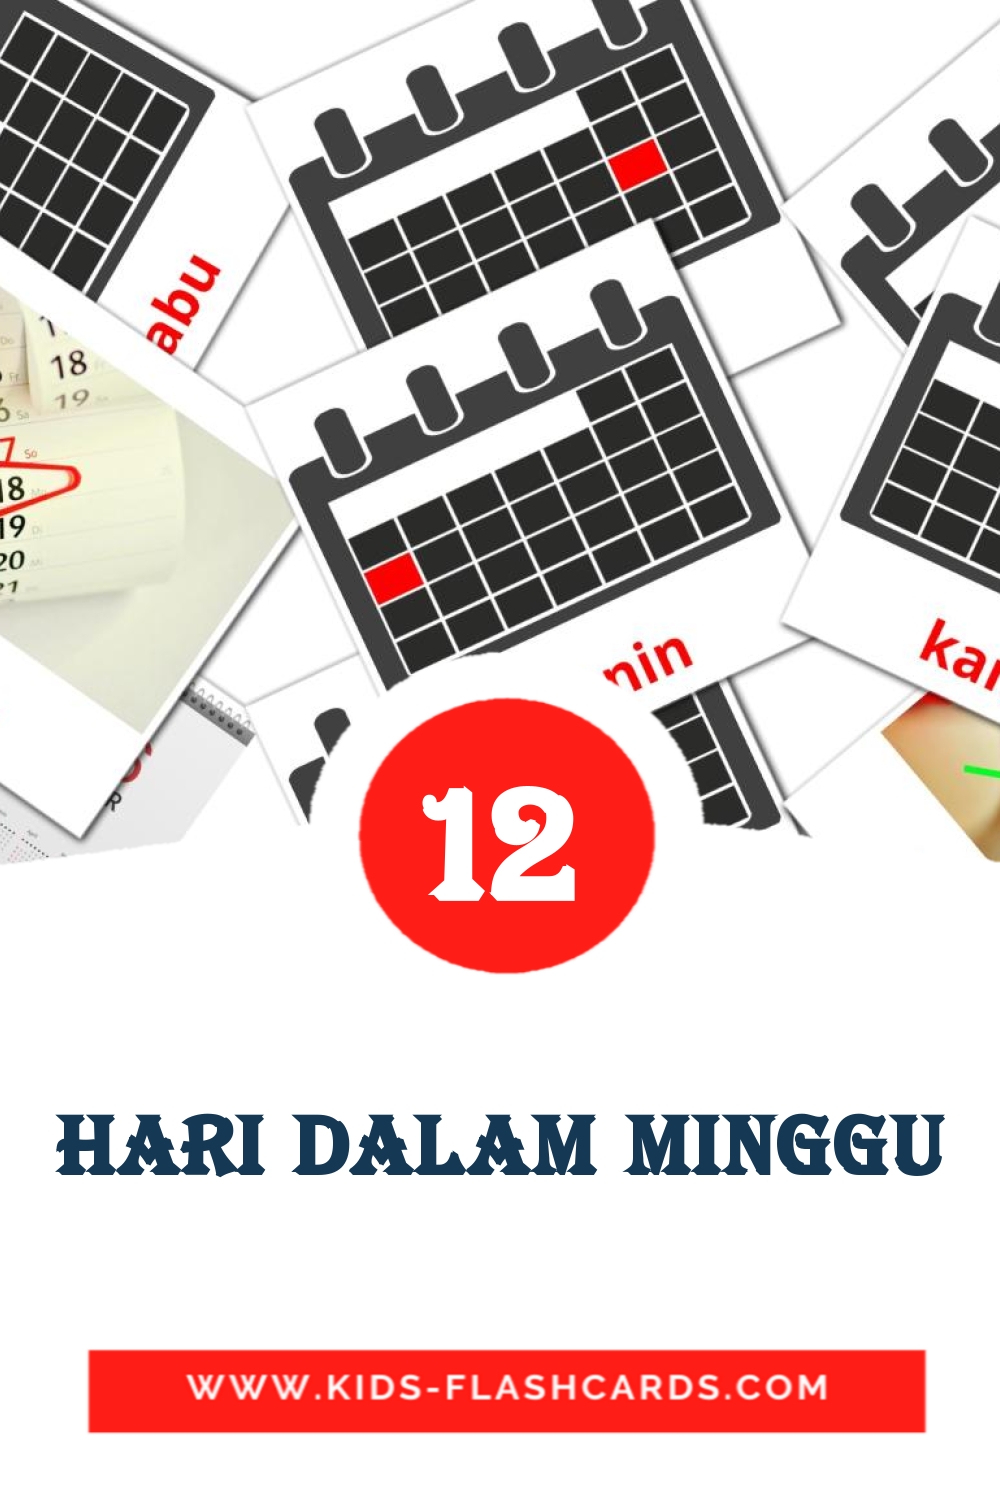 12 carte illustrate di Hari dalam minggu per la scuola materna in indonesiano